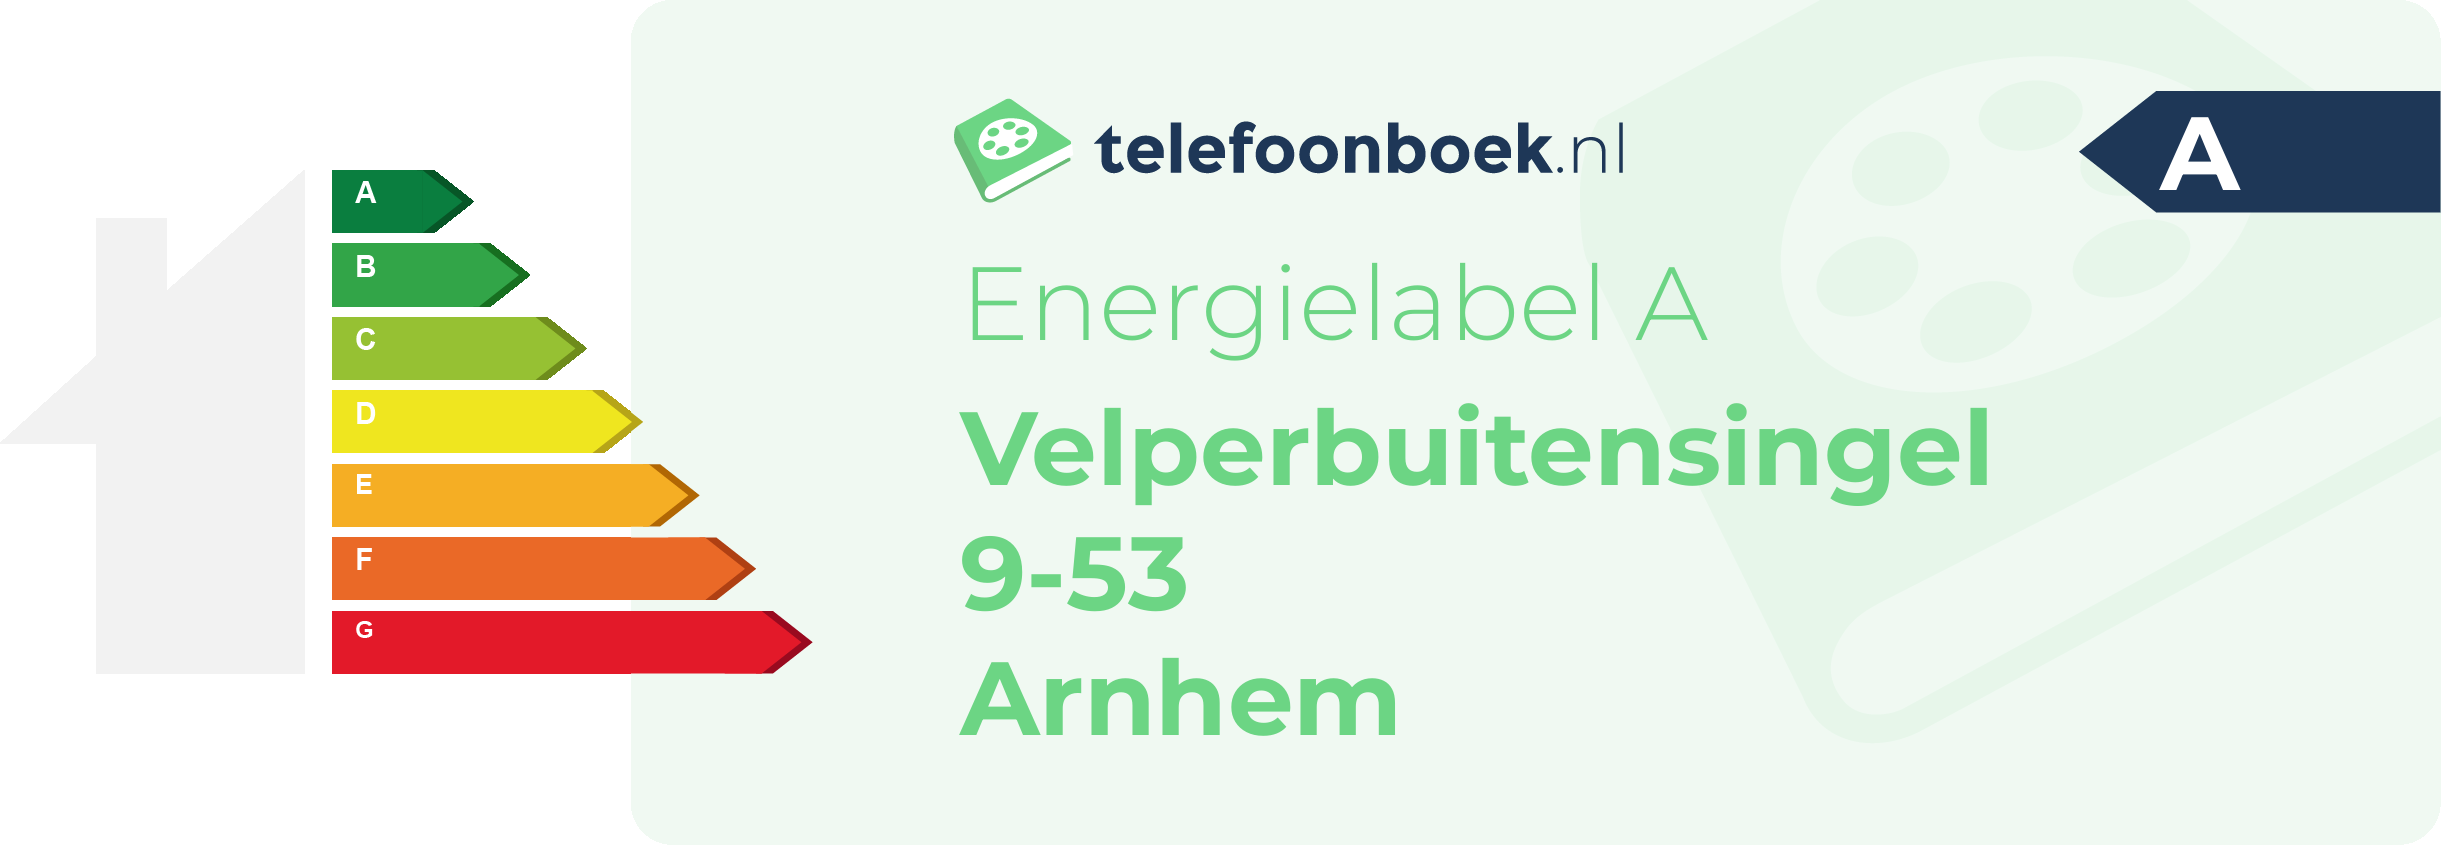 Energielabel Velperbuitensingel 9-53 Arnhem